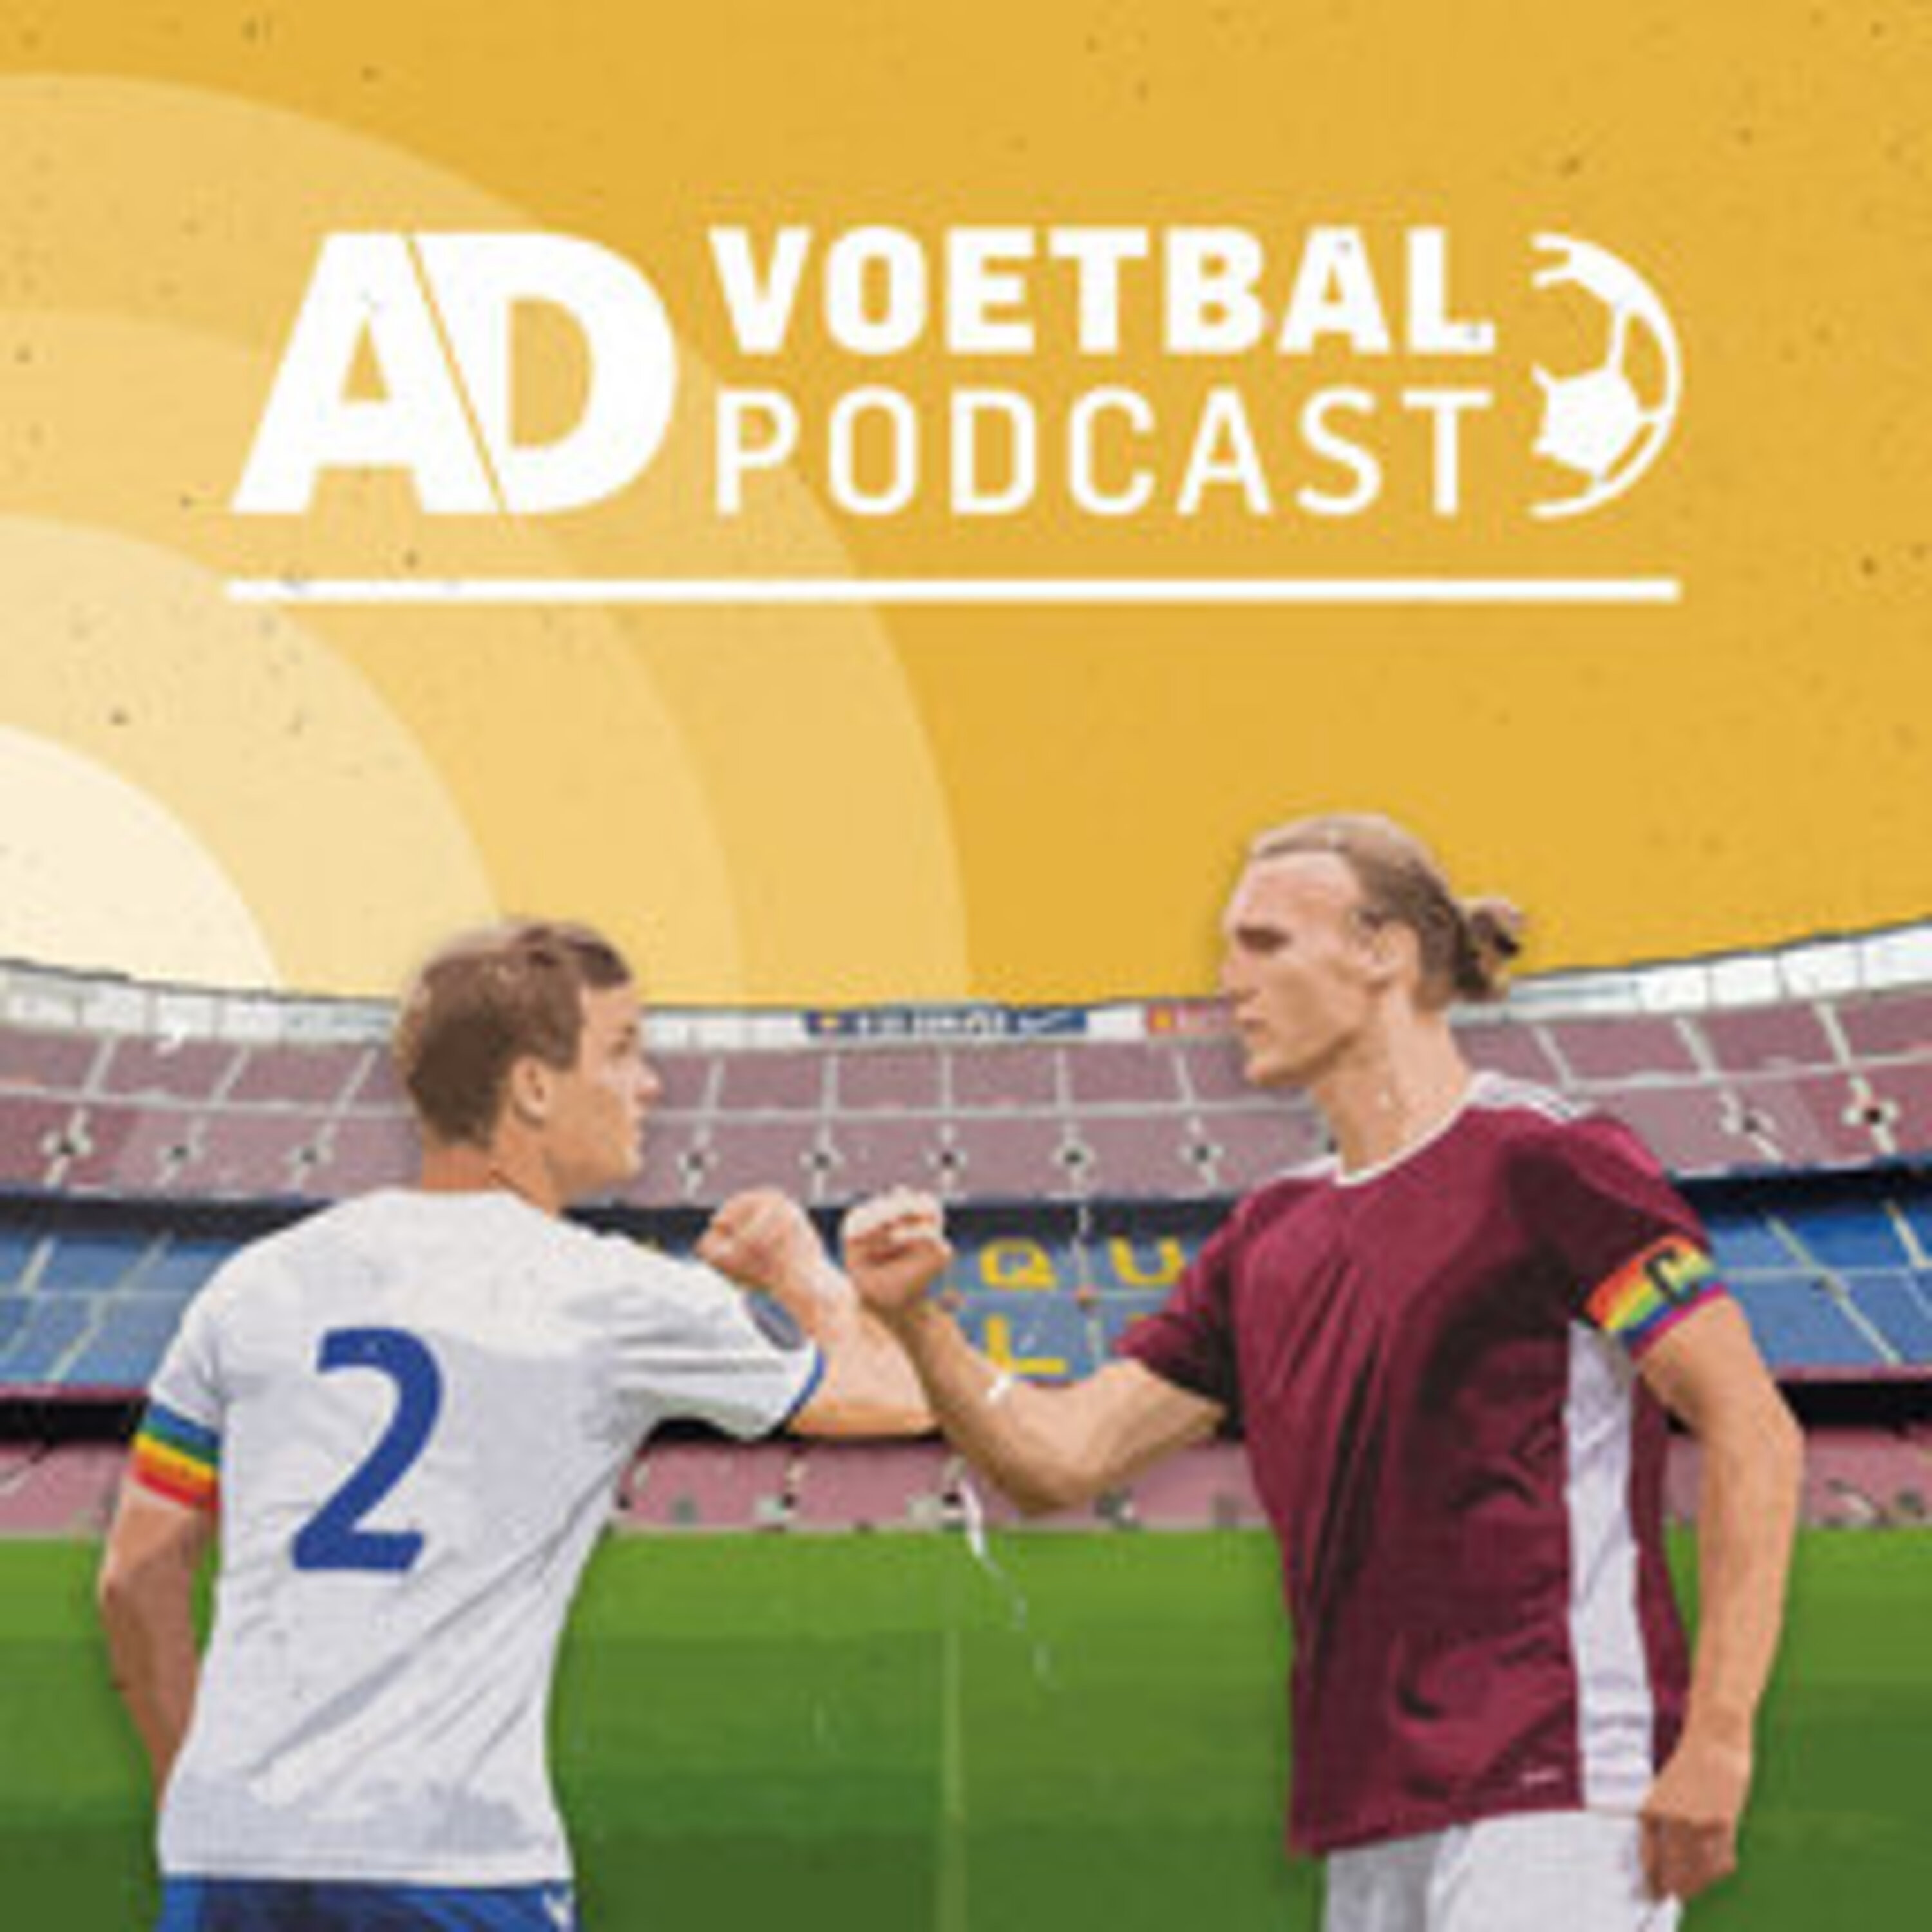 AD Voetbal podcast logo